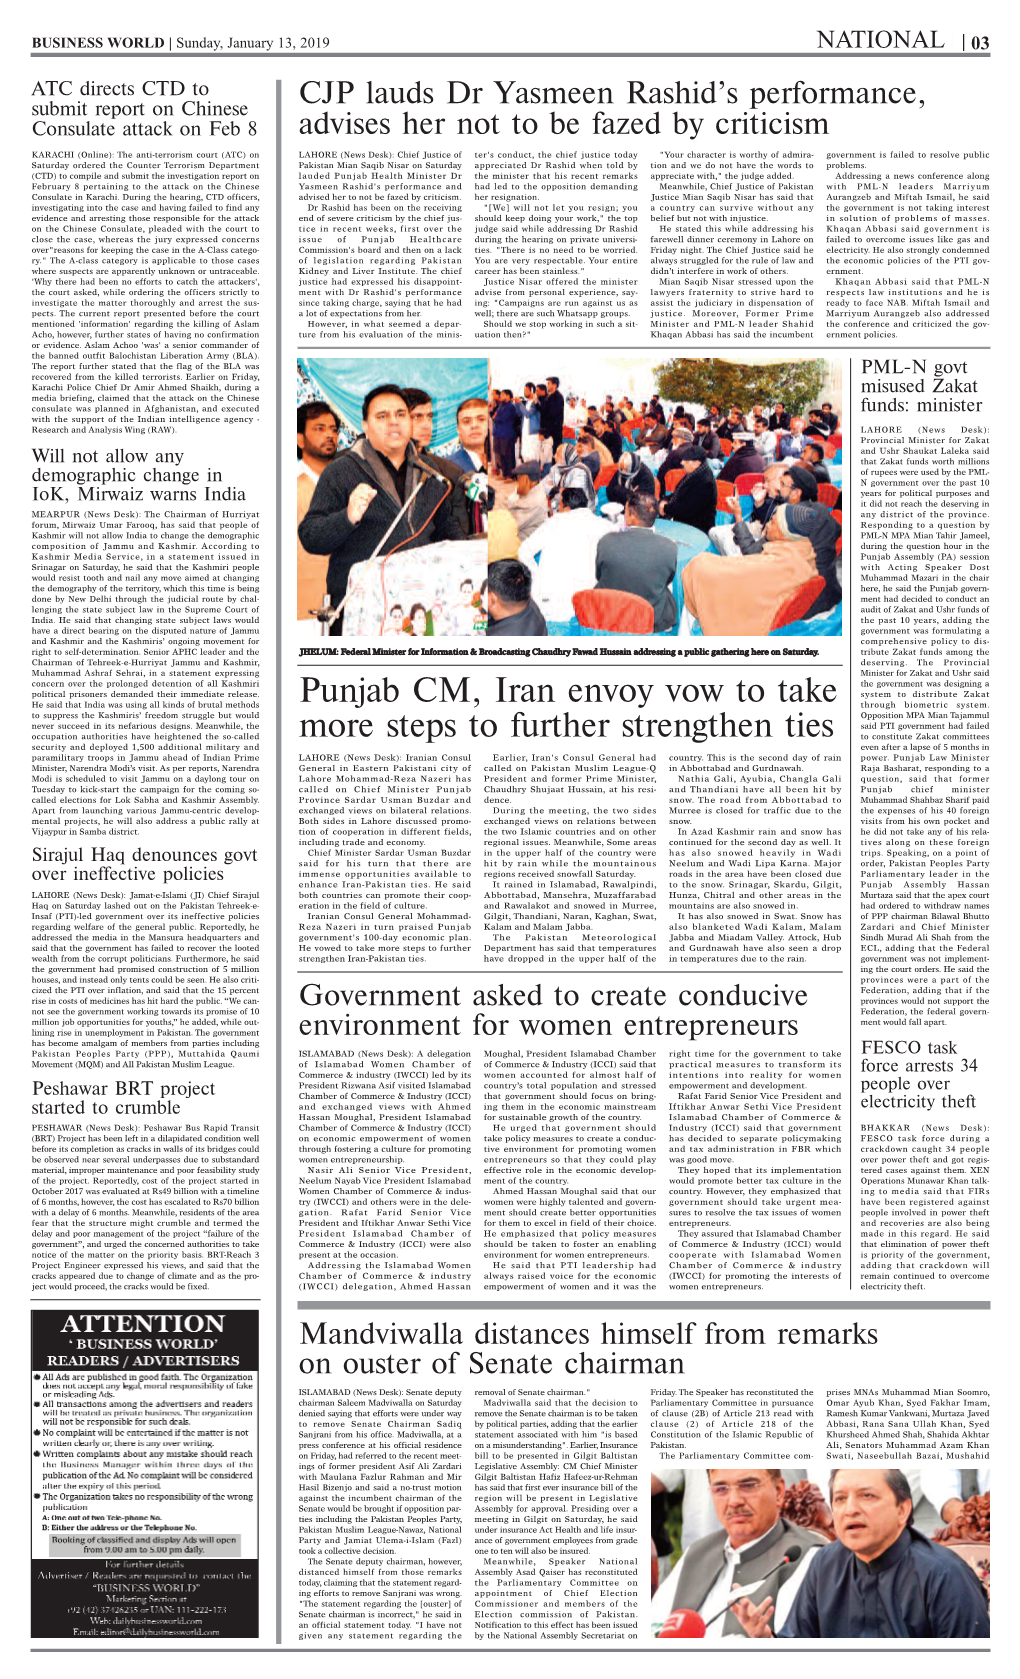 Punjab CM, Iran Envoy Vow to Take More Steps to Further Strengthen Ties